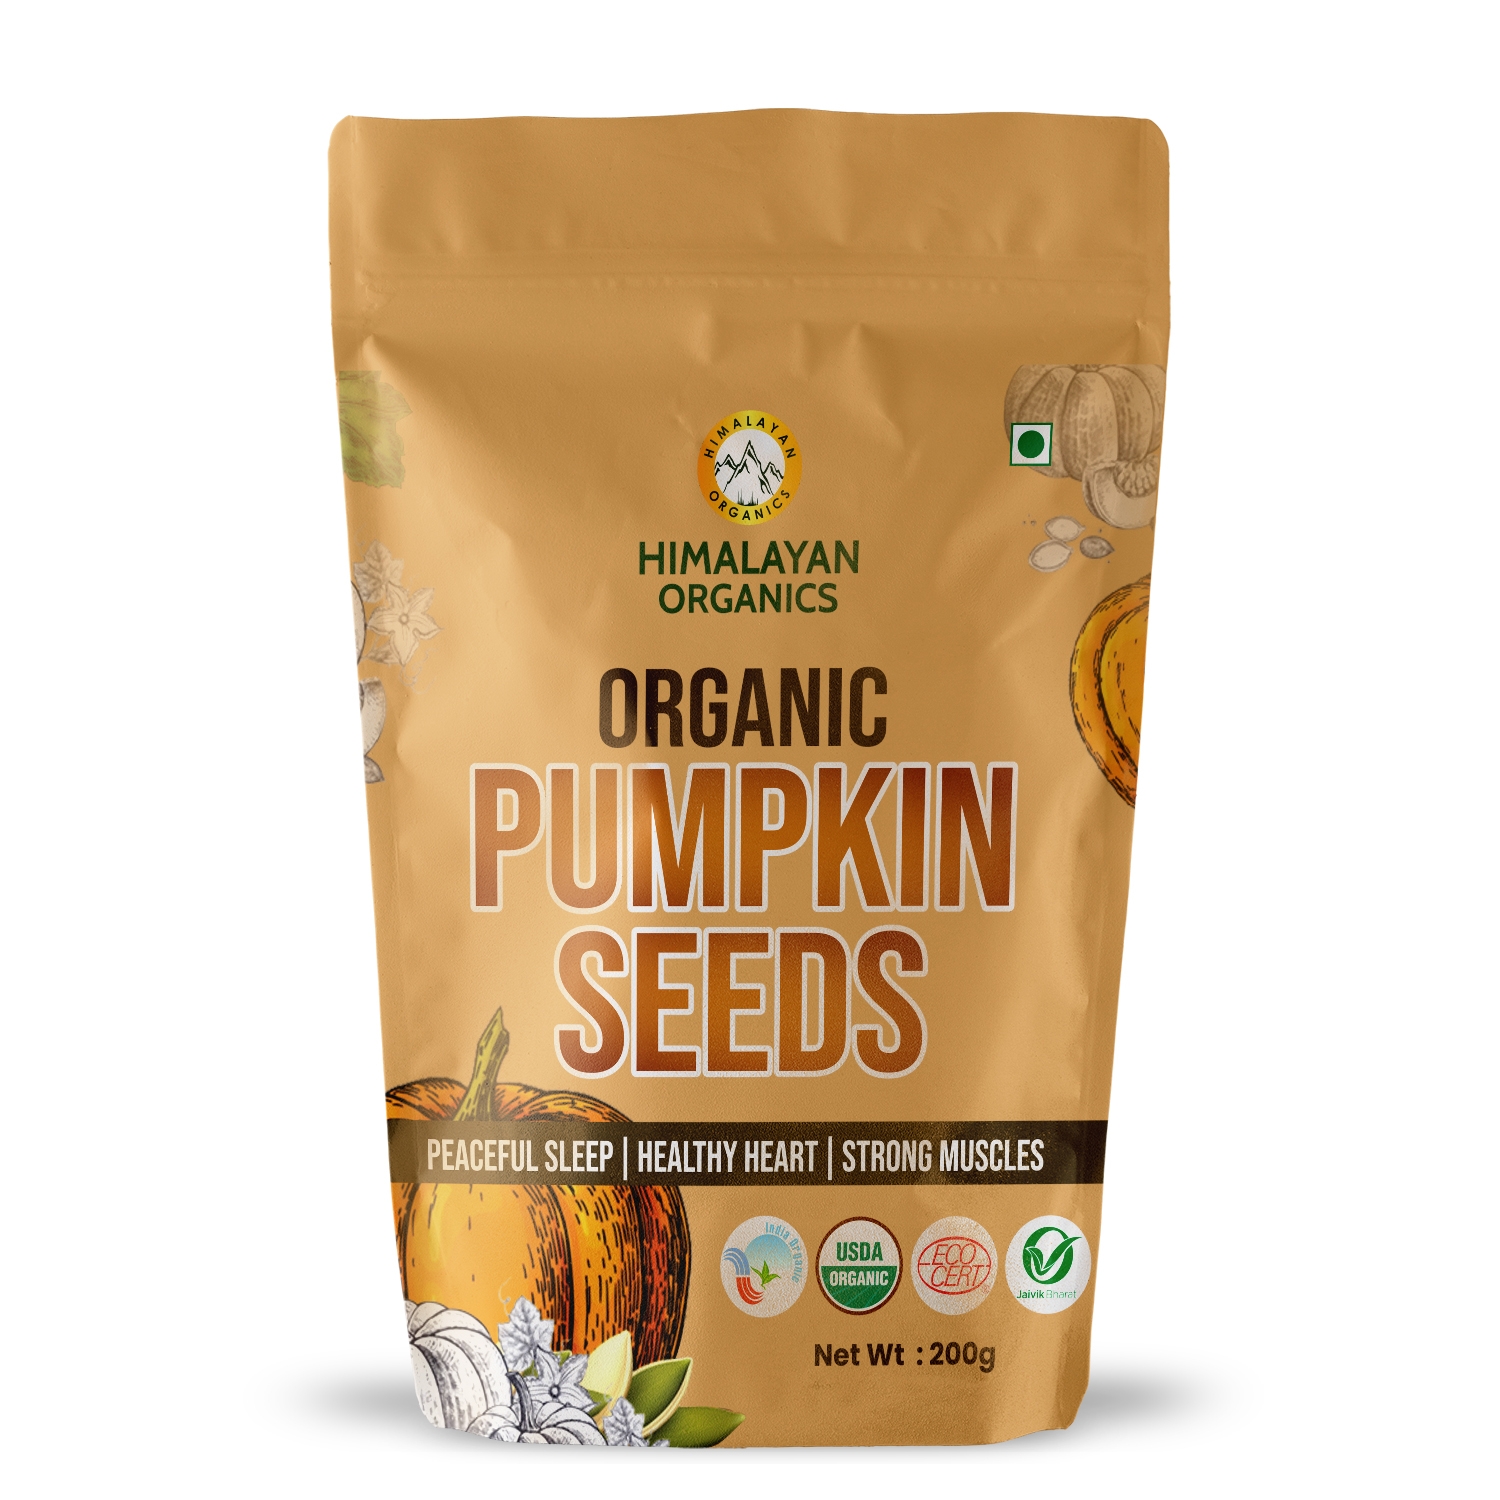 Himalayan Organics Certified Organic Pumpkin Seeds - Rich in Fiber & Minerals - Helps in Peaceful Sleep & Healthy Muscles